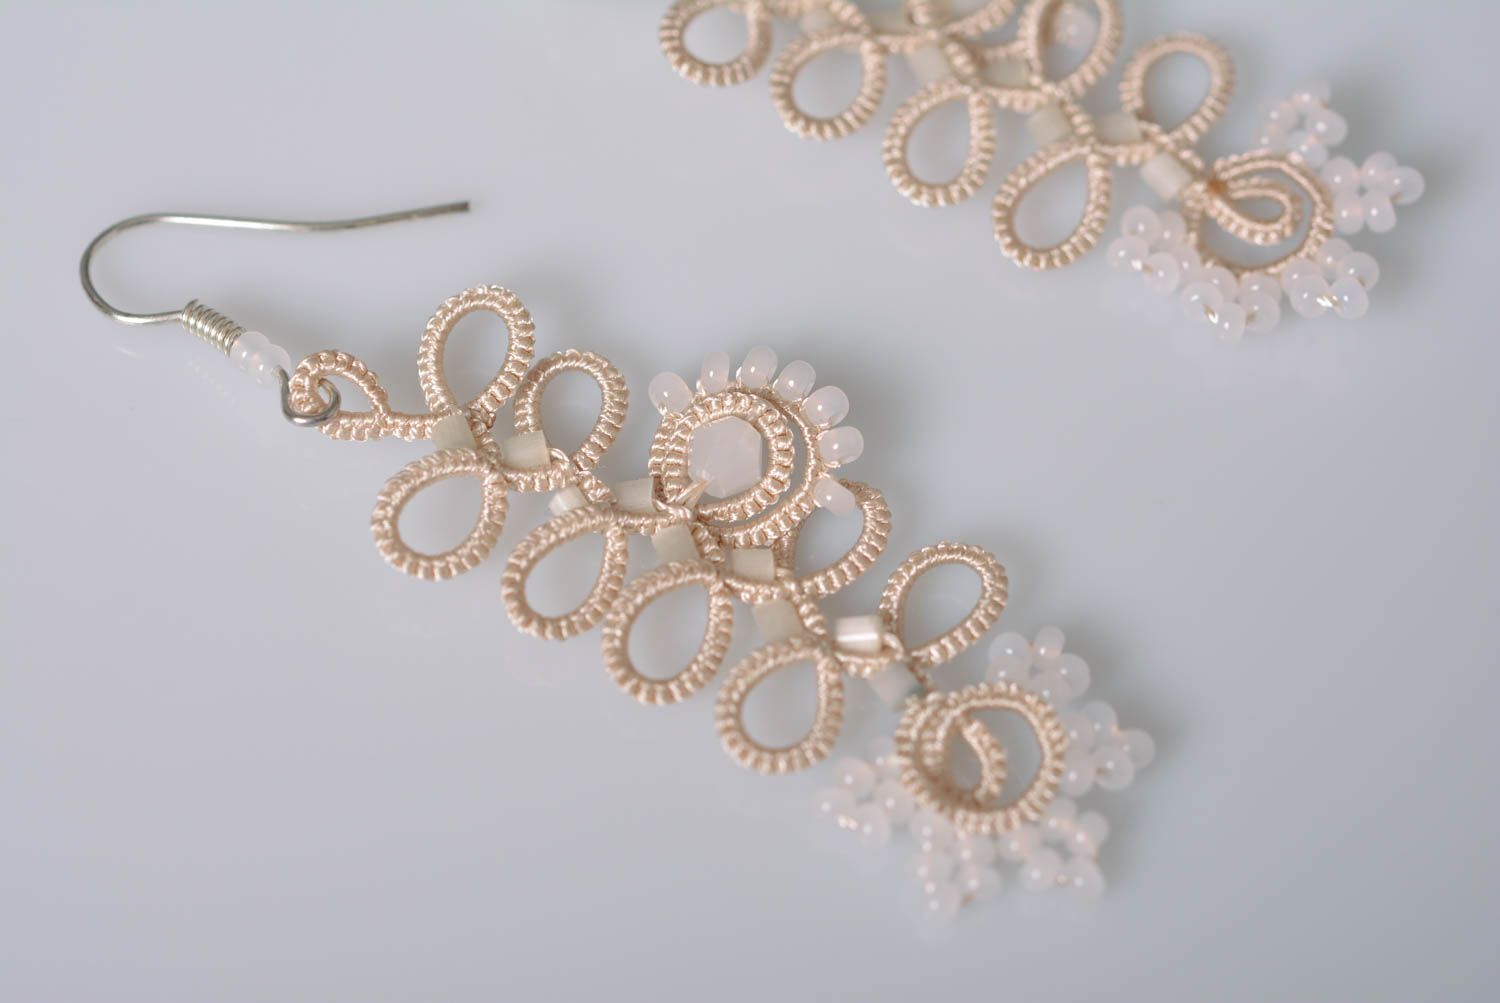 Handmade jewelry set designer necklace handmade earrings tatting lace gift ideas photo 2